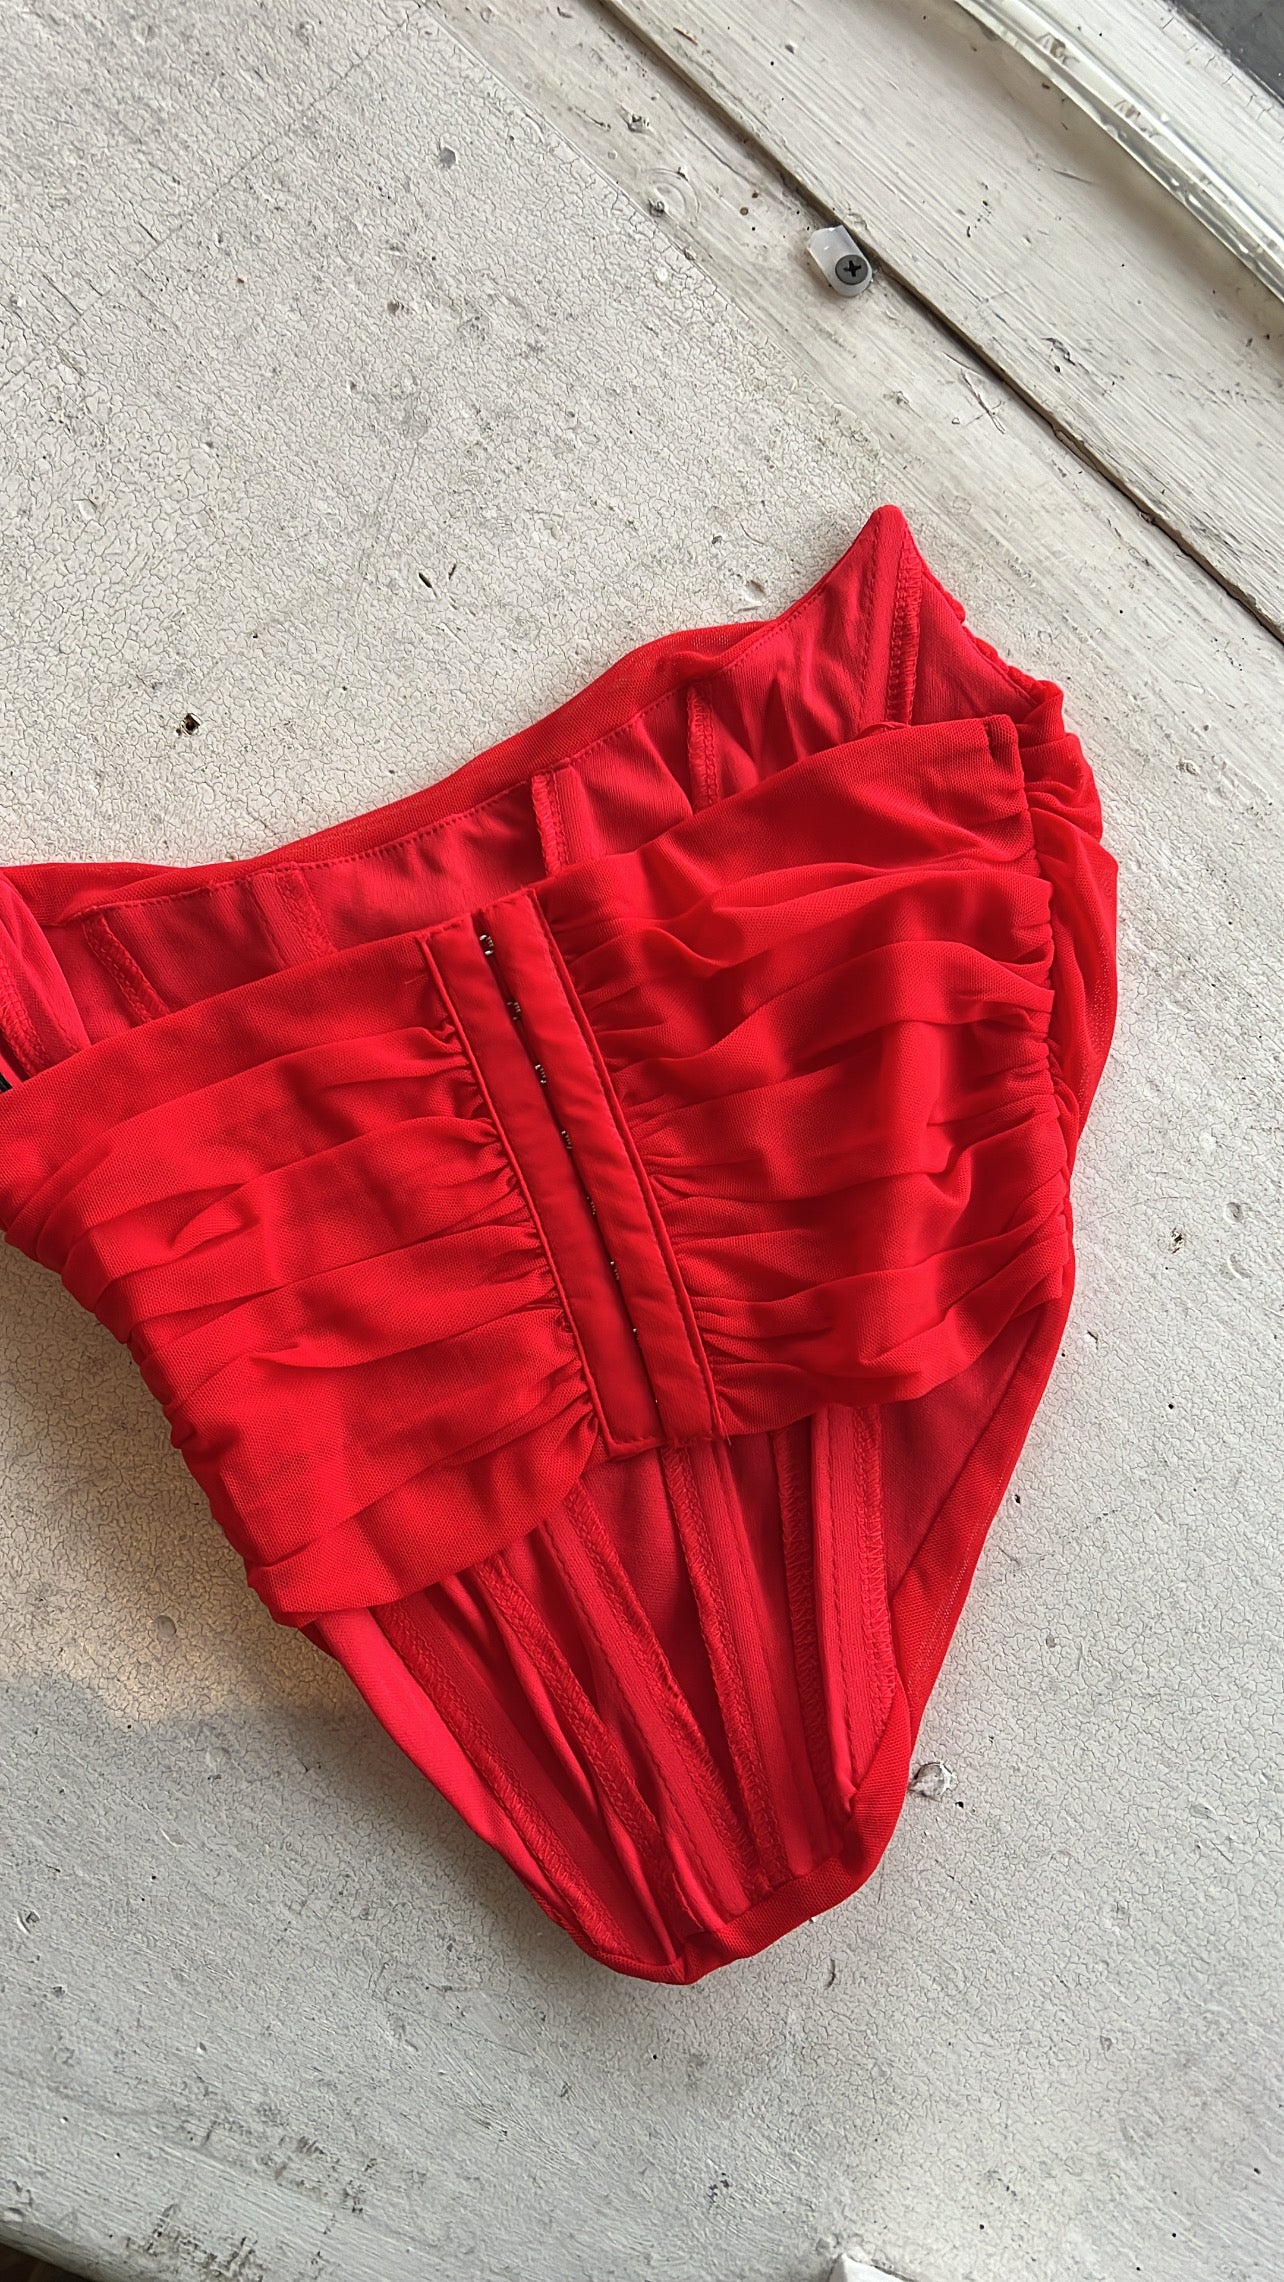 Red love corset